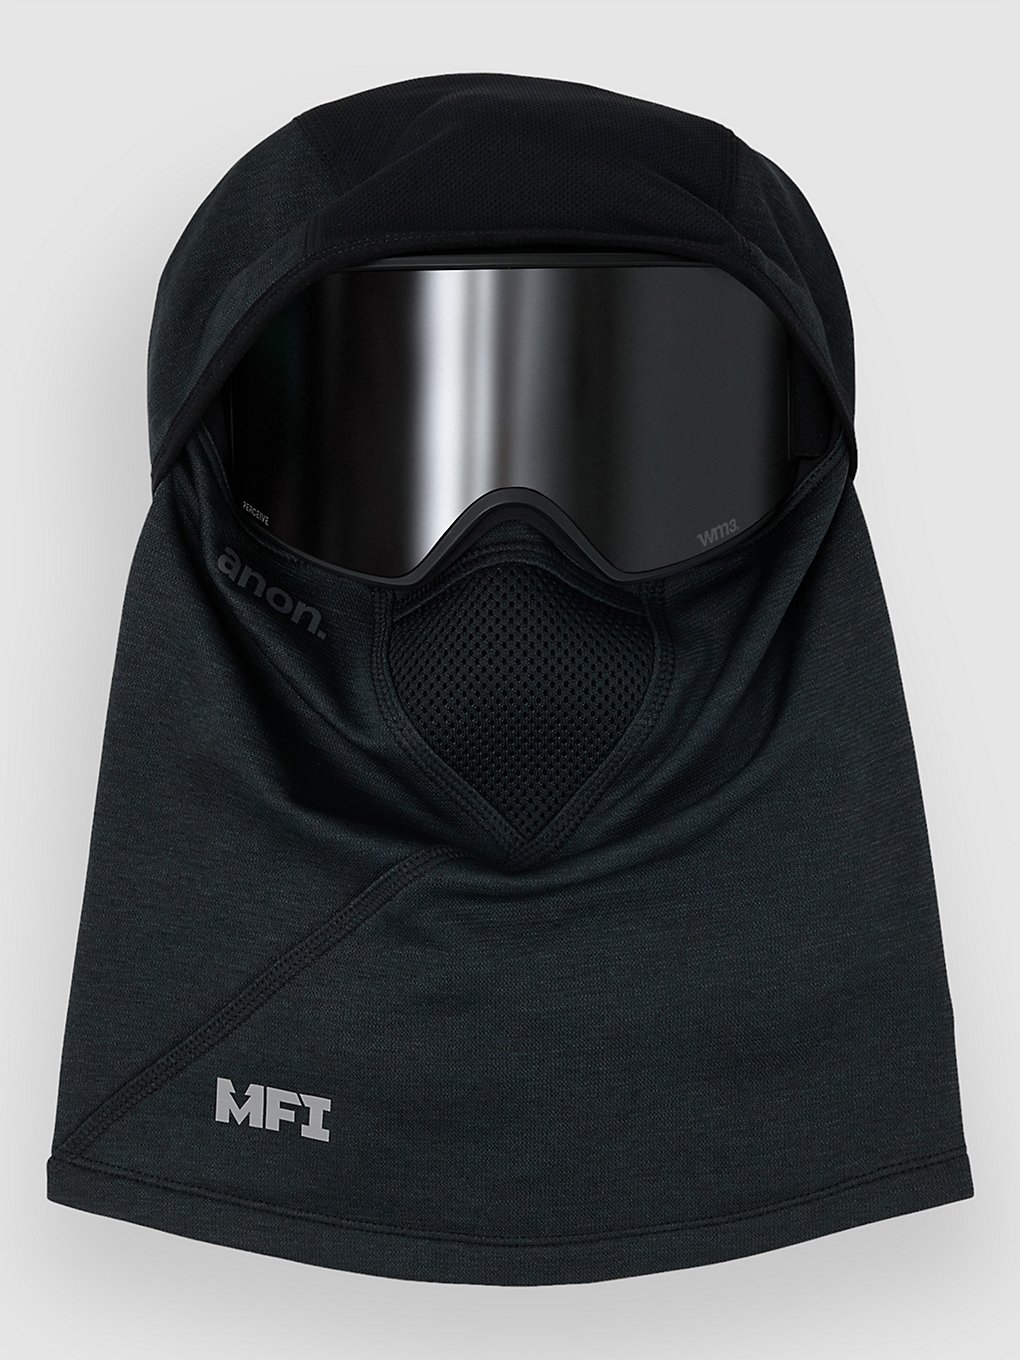 Anon MFI Tech Sturmmaske black kaufen